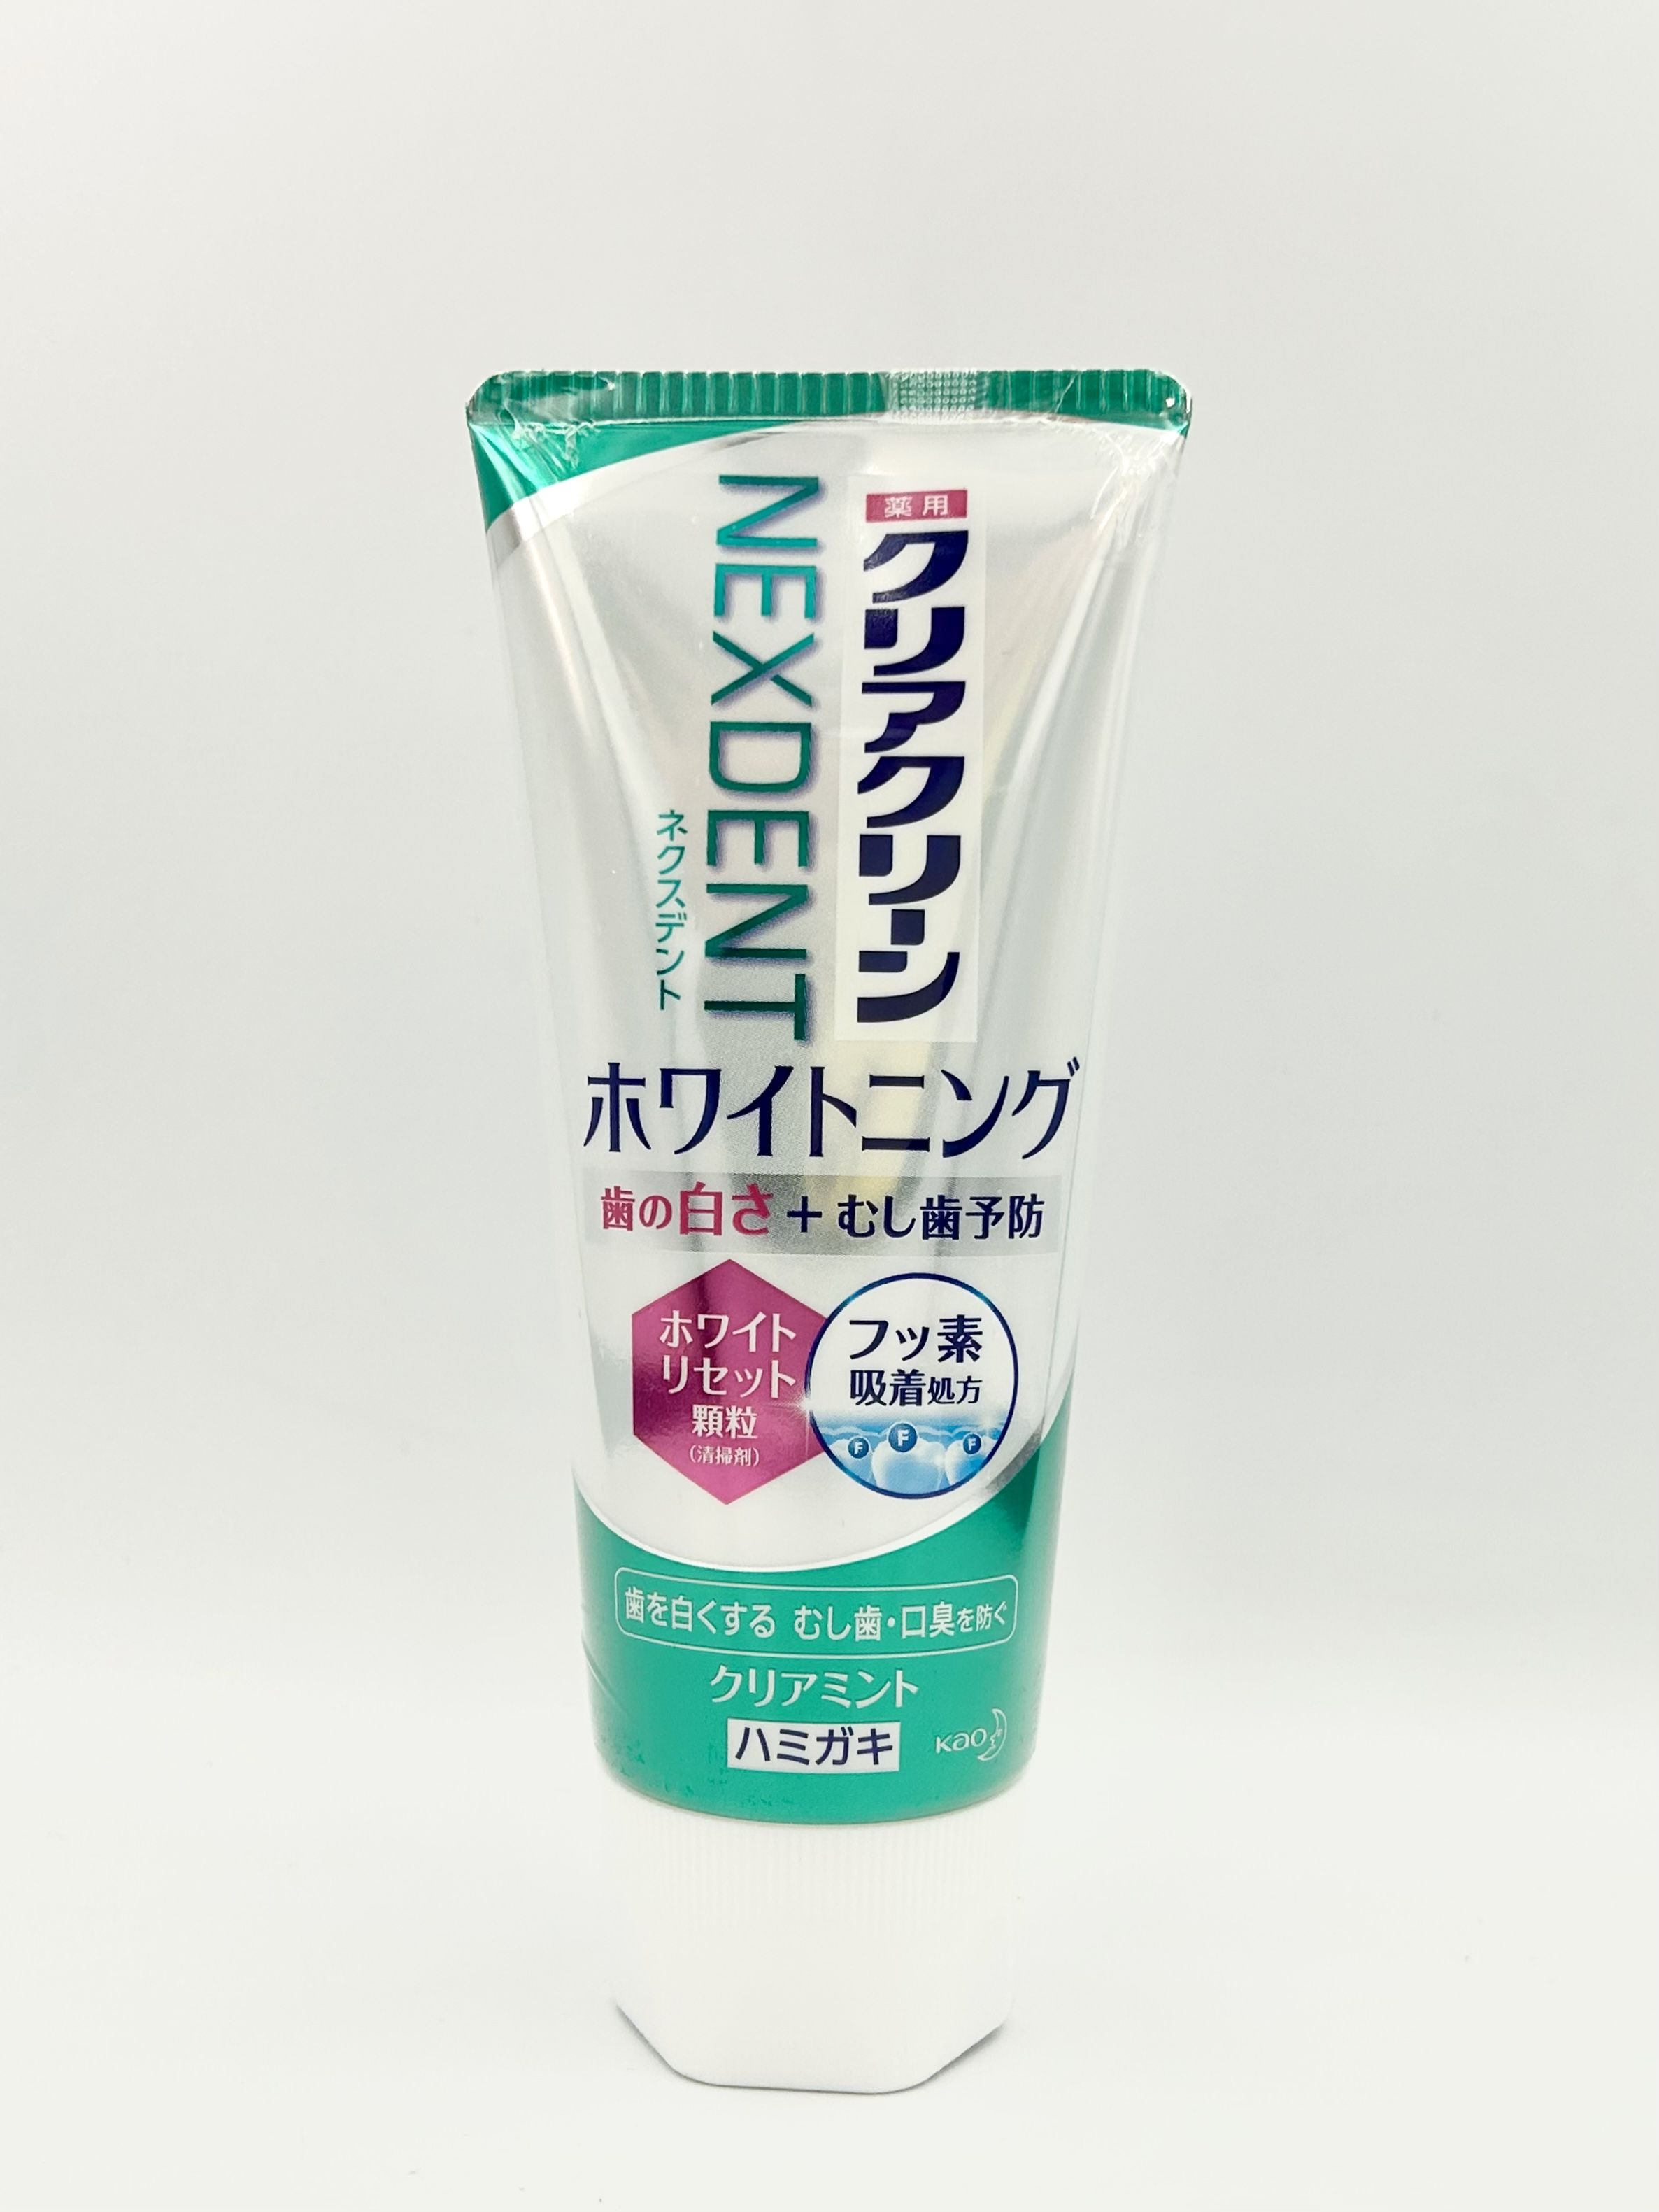 Kao Clear Clean Nexdent Whitening Apple Chamomile Лечебно-профилактическая зубная паста отбеливающая с микрогранулами Освежающая мята 120 гр